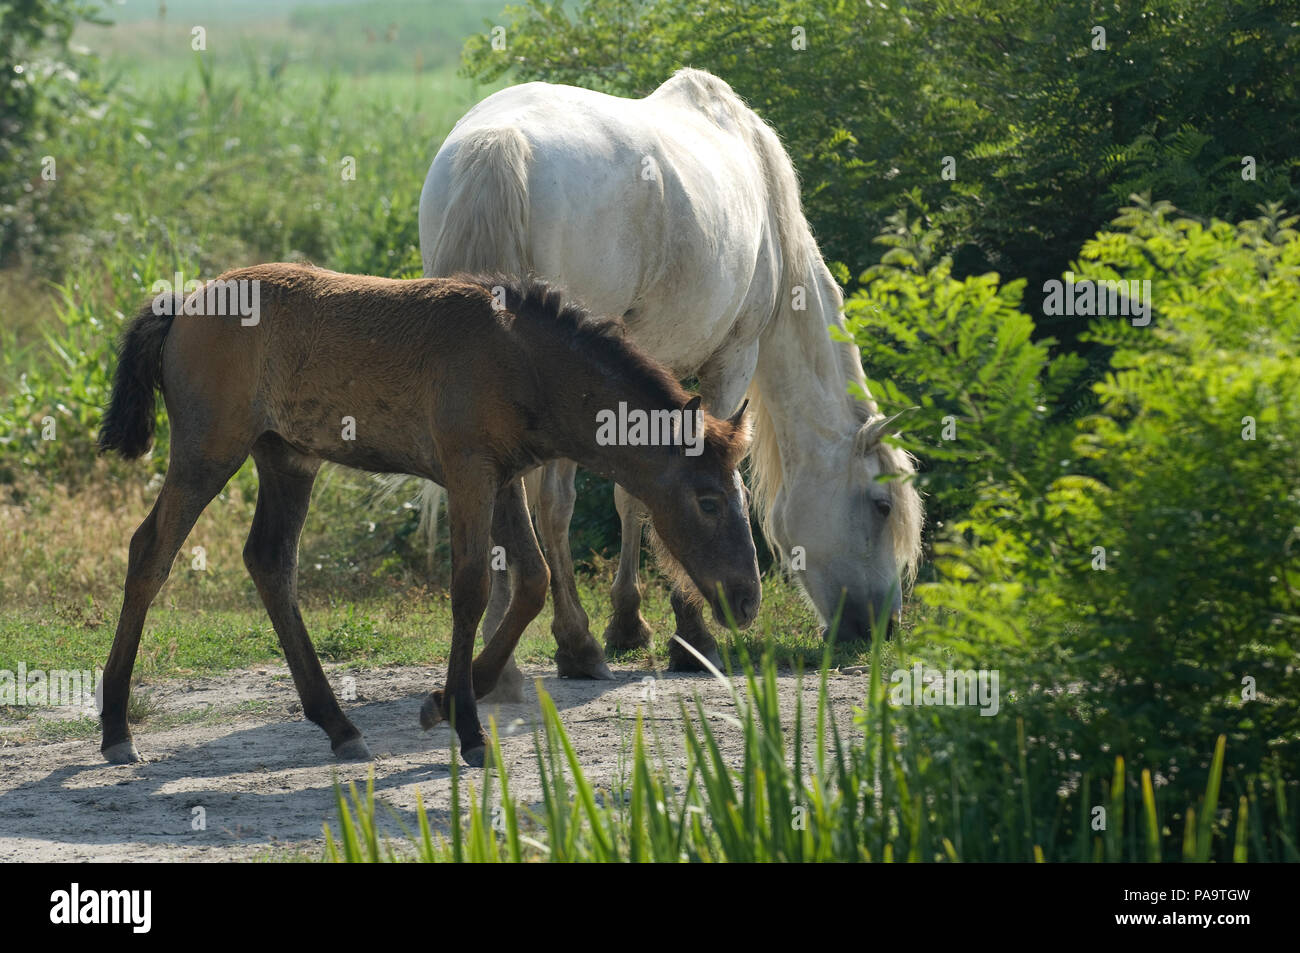 Cheval Camargue - poulain et jument - Cavallo selvaggio della Camargue - puledro e mare - Equus caballus Foto Stock